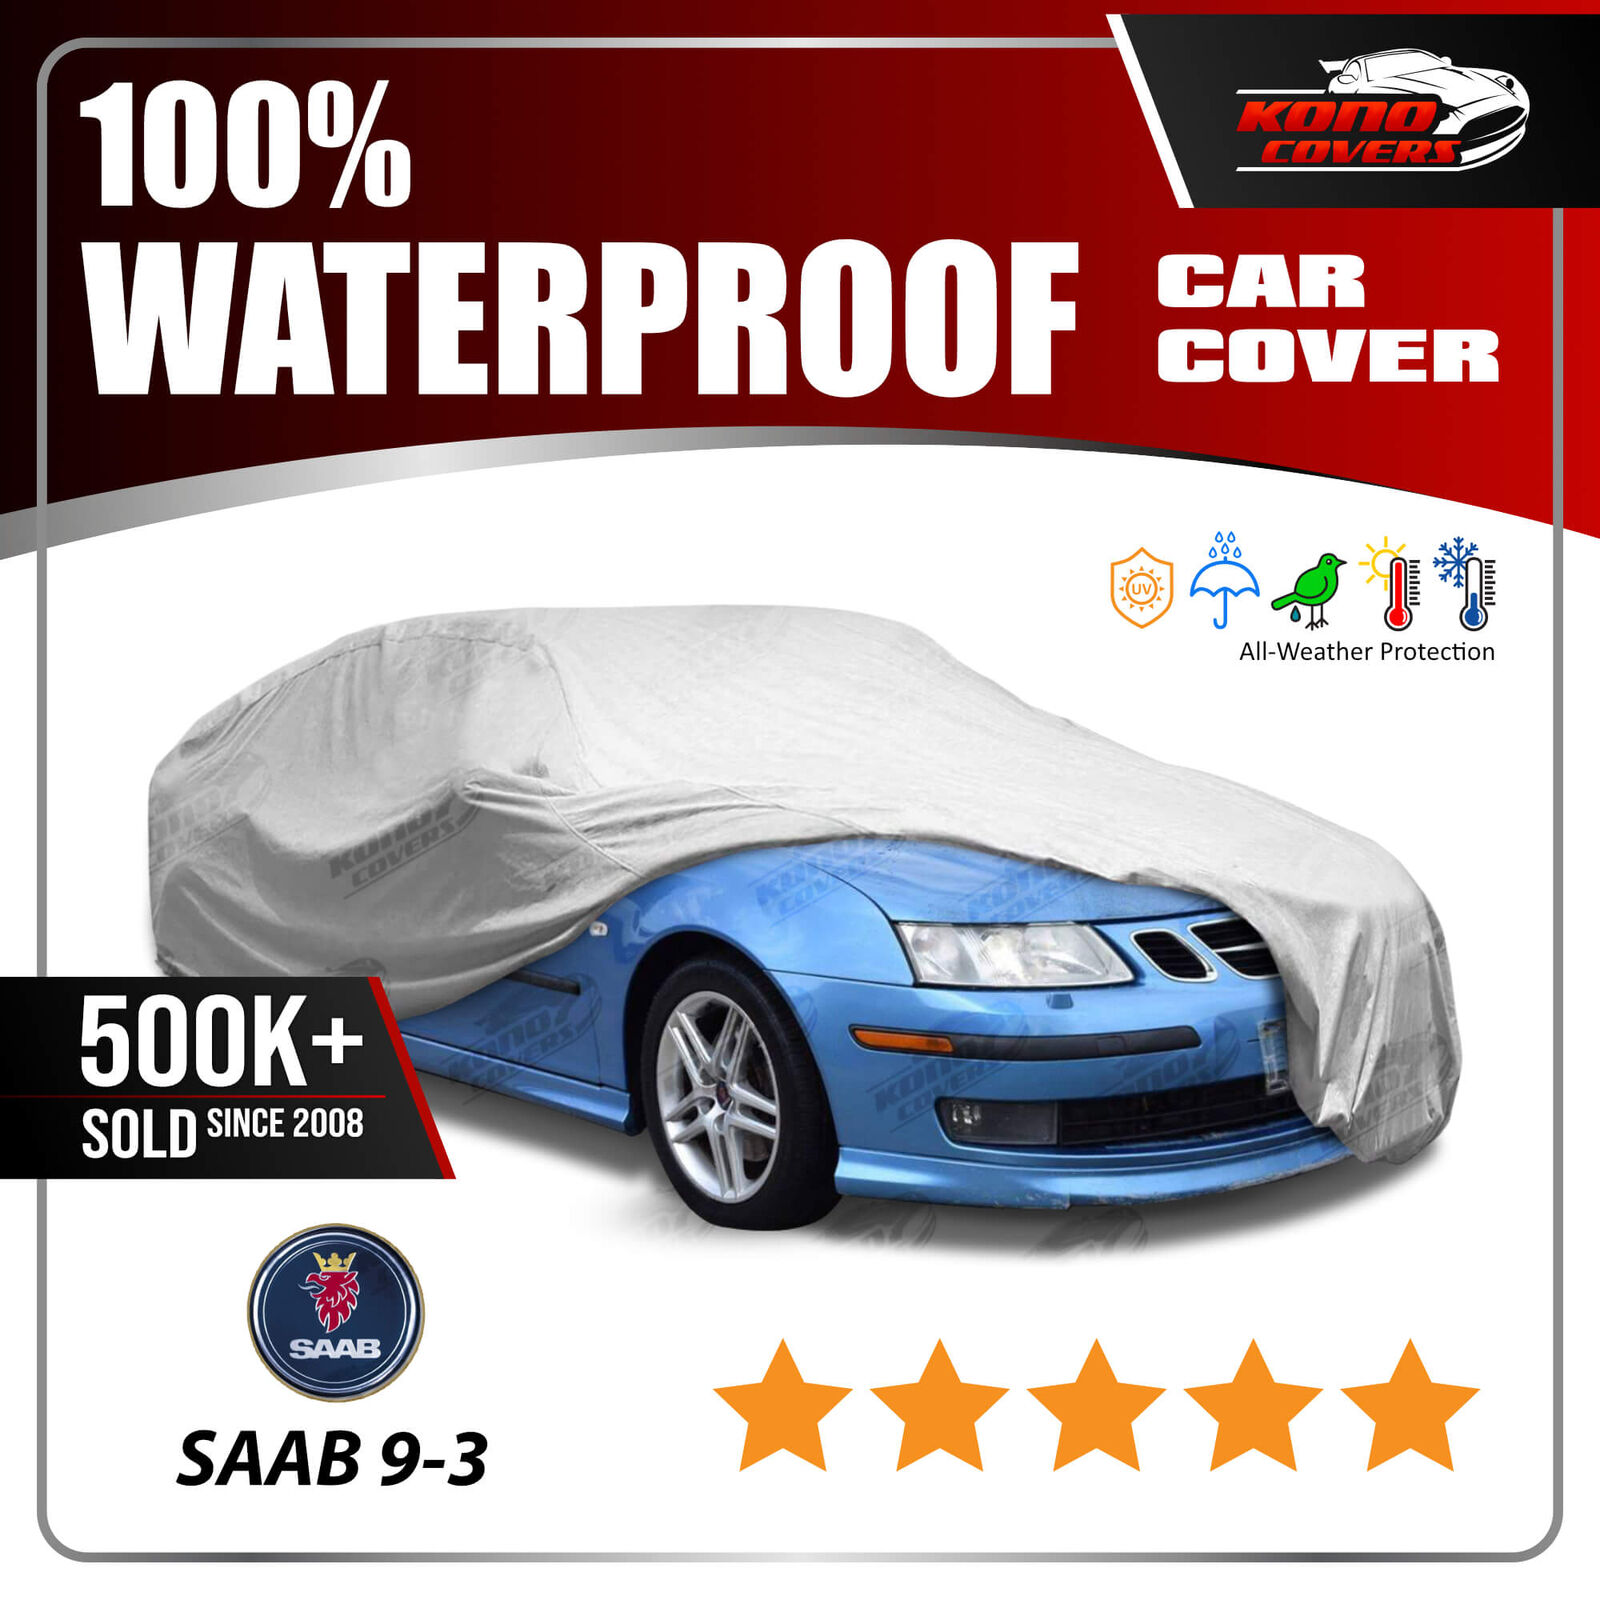 SAAB 9-3 Convertible 1999-2006 CAR COVER - 100% Waterproof 100% Breathable